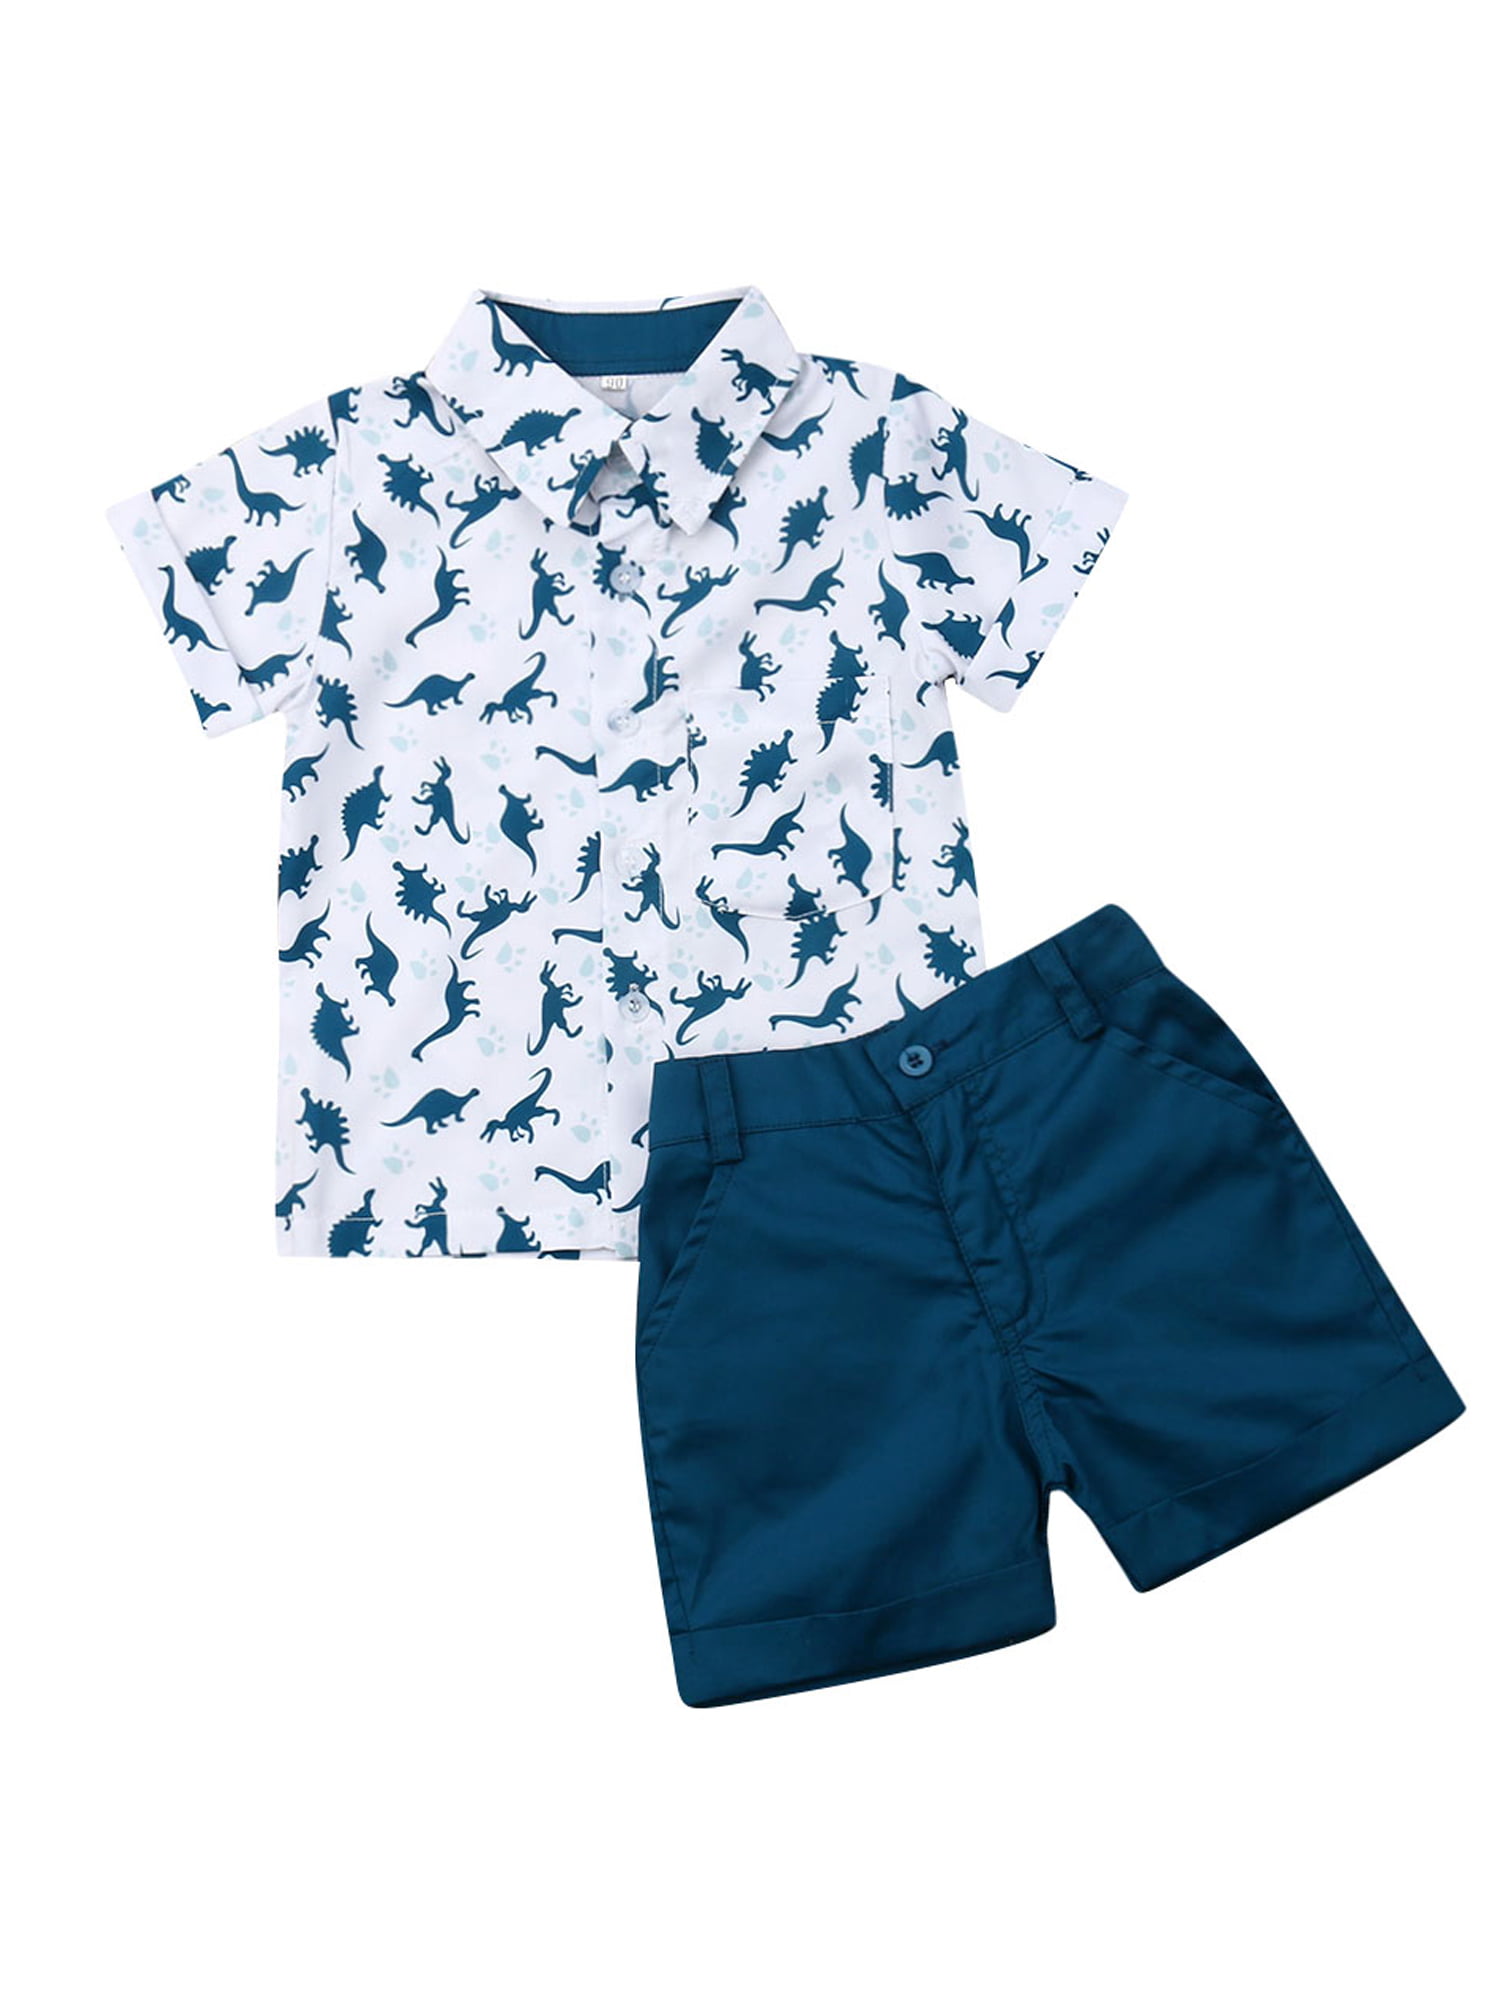 Baby Kids Boys Summer Clothes Short Sleeve Shirt Tops+Shorts Sets Casual Outfits 